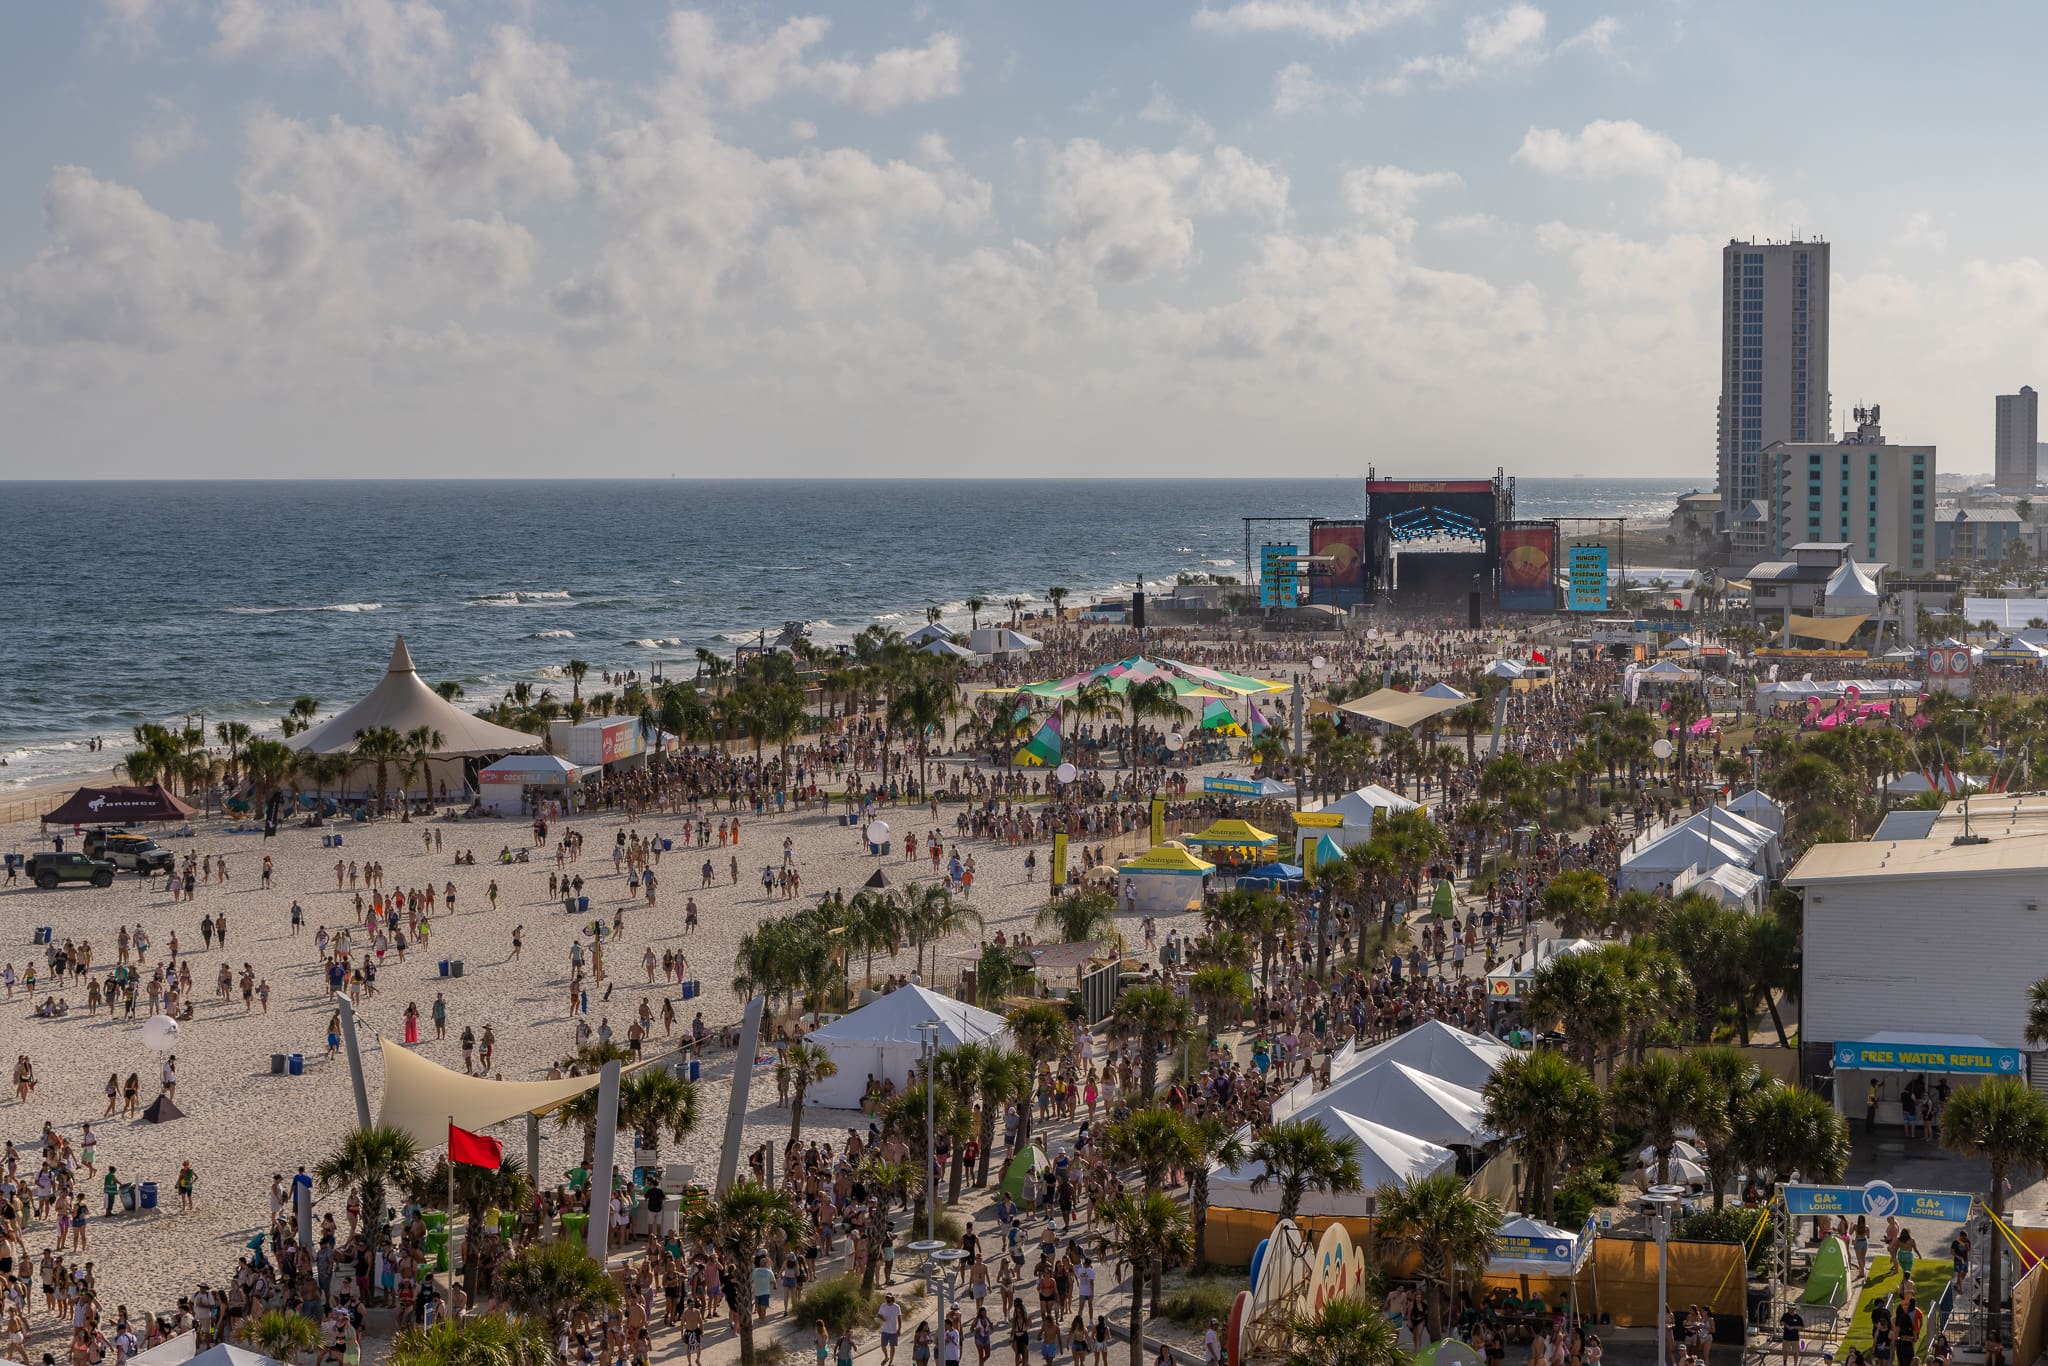 The best music festivals in the US | Beachside festival scenes at Hangout Music Fest